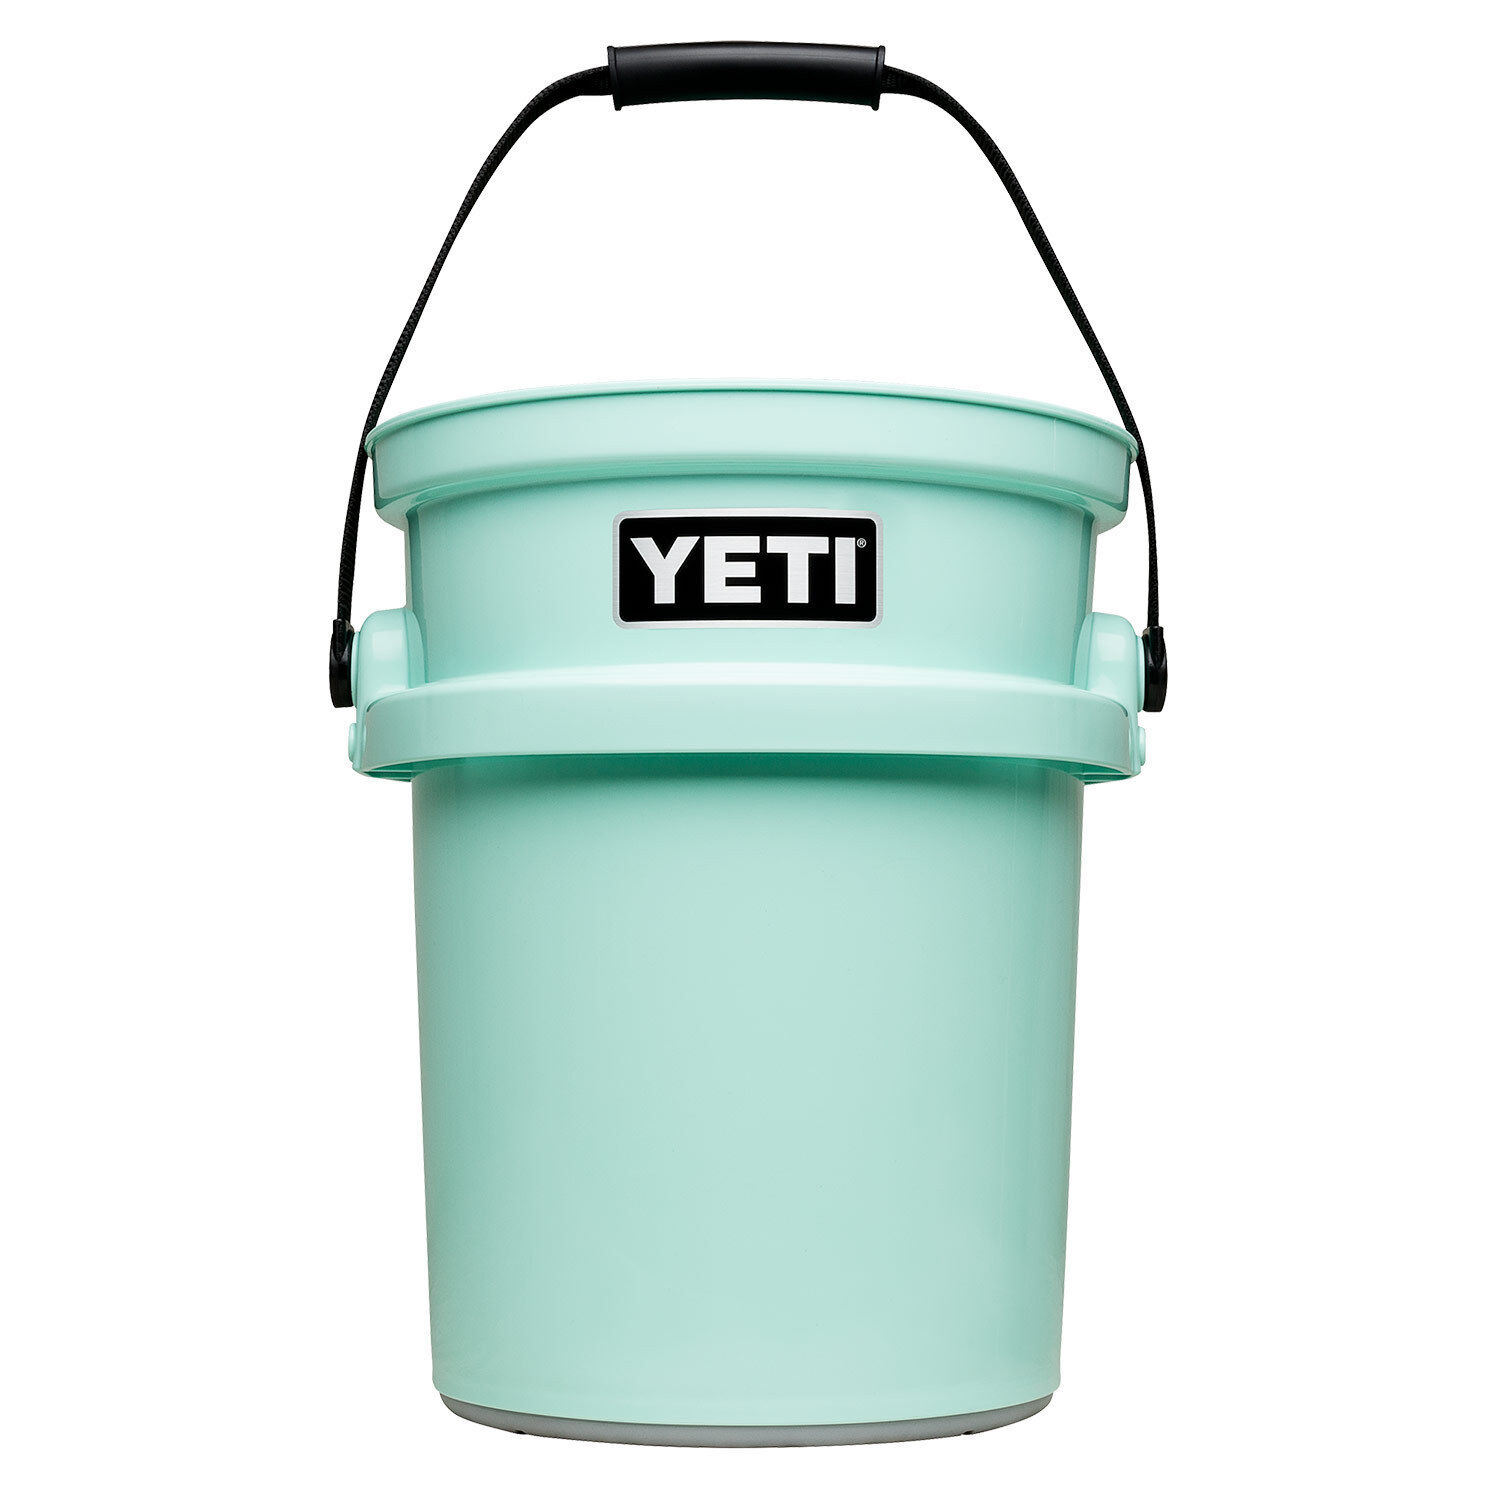 Drink & Phone Holder for YETI LoadOut Bucket – Tideline3D